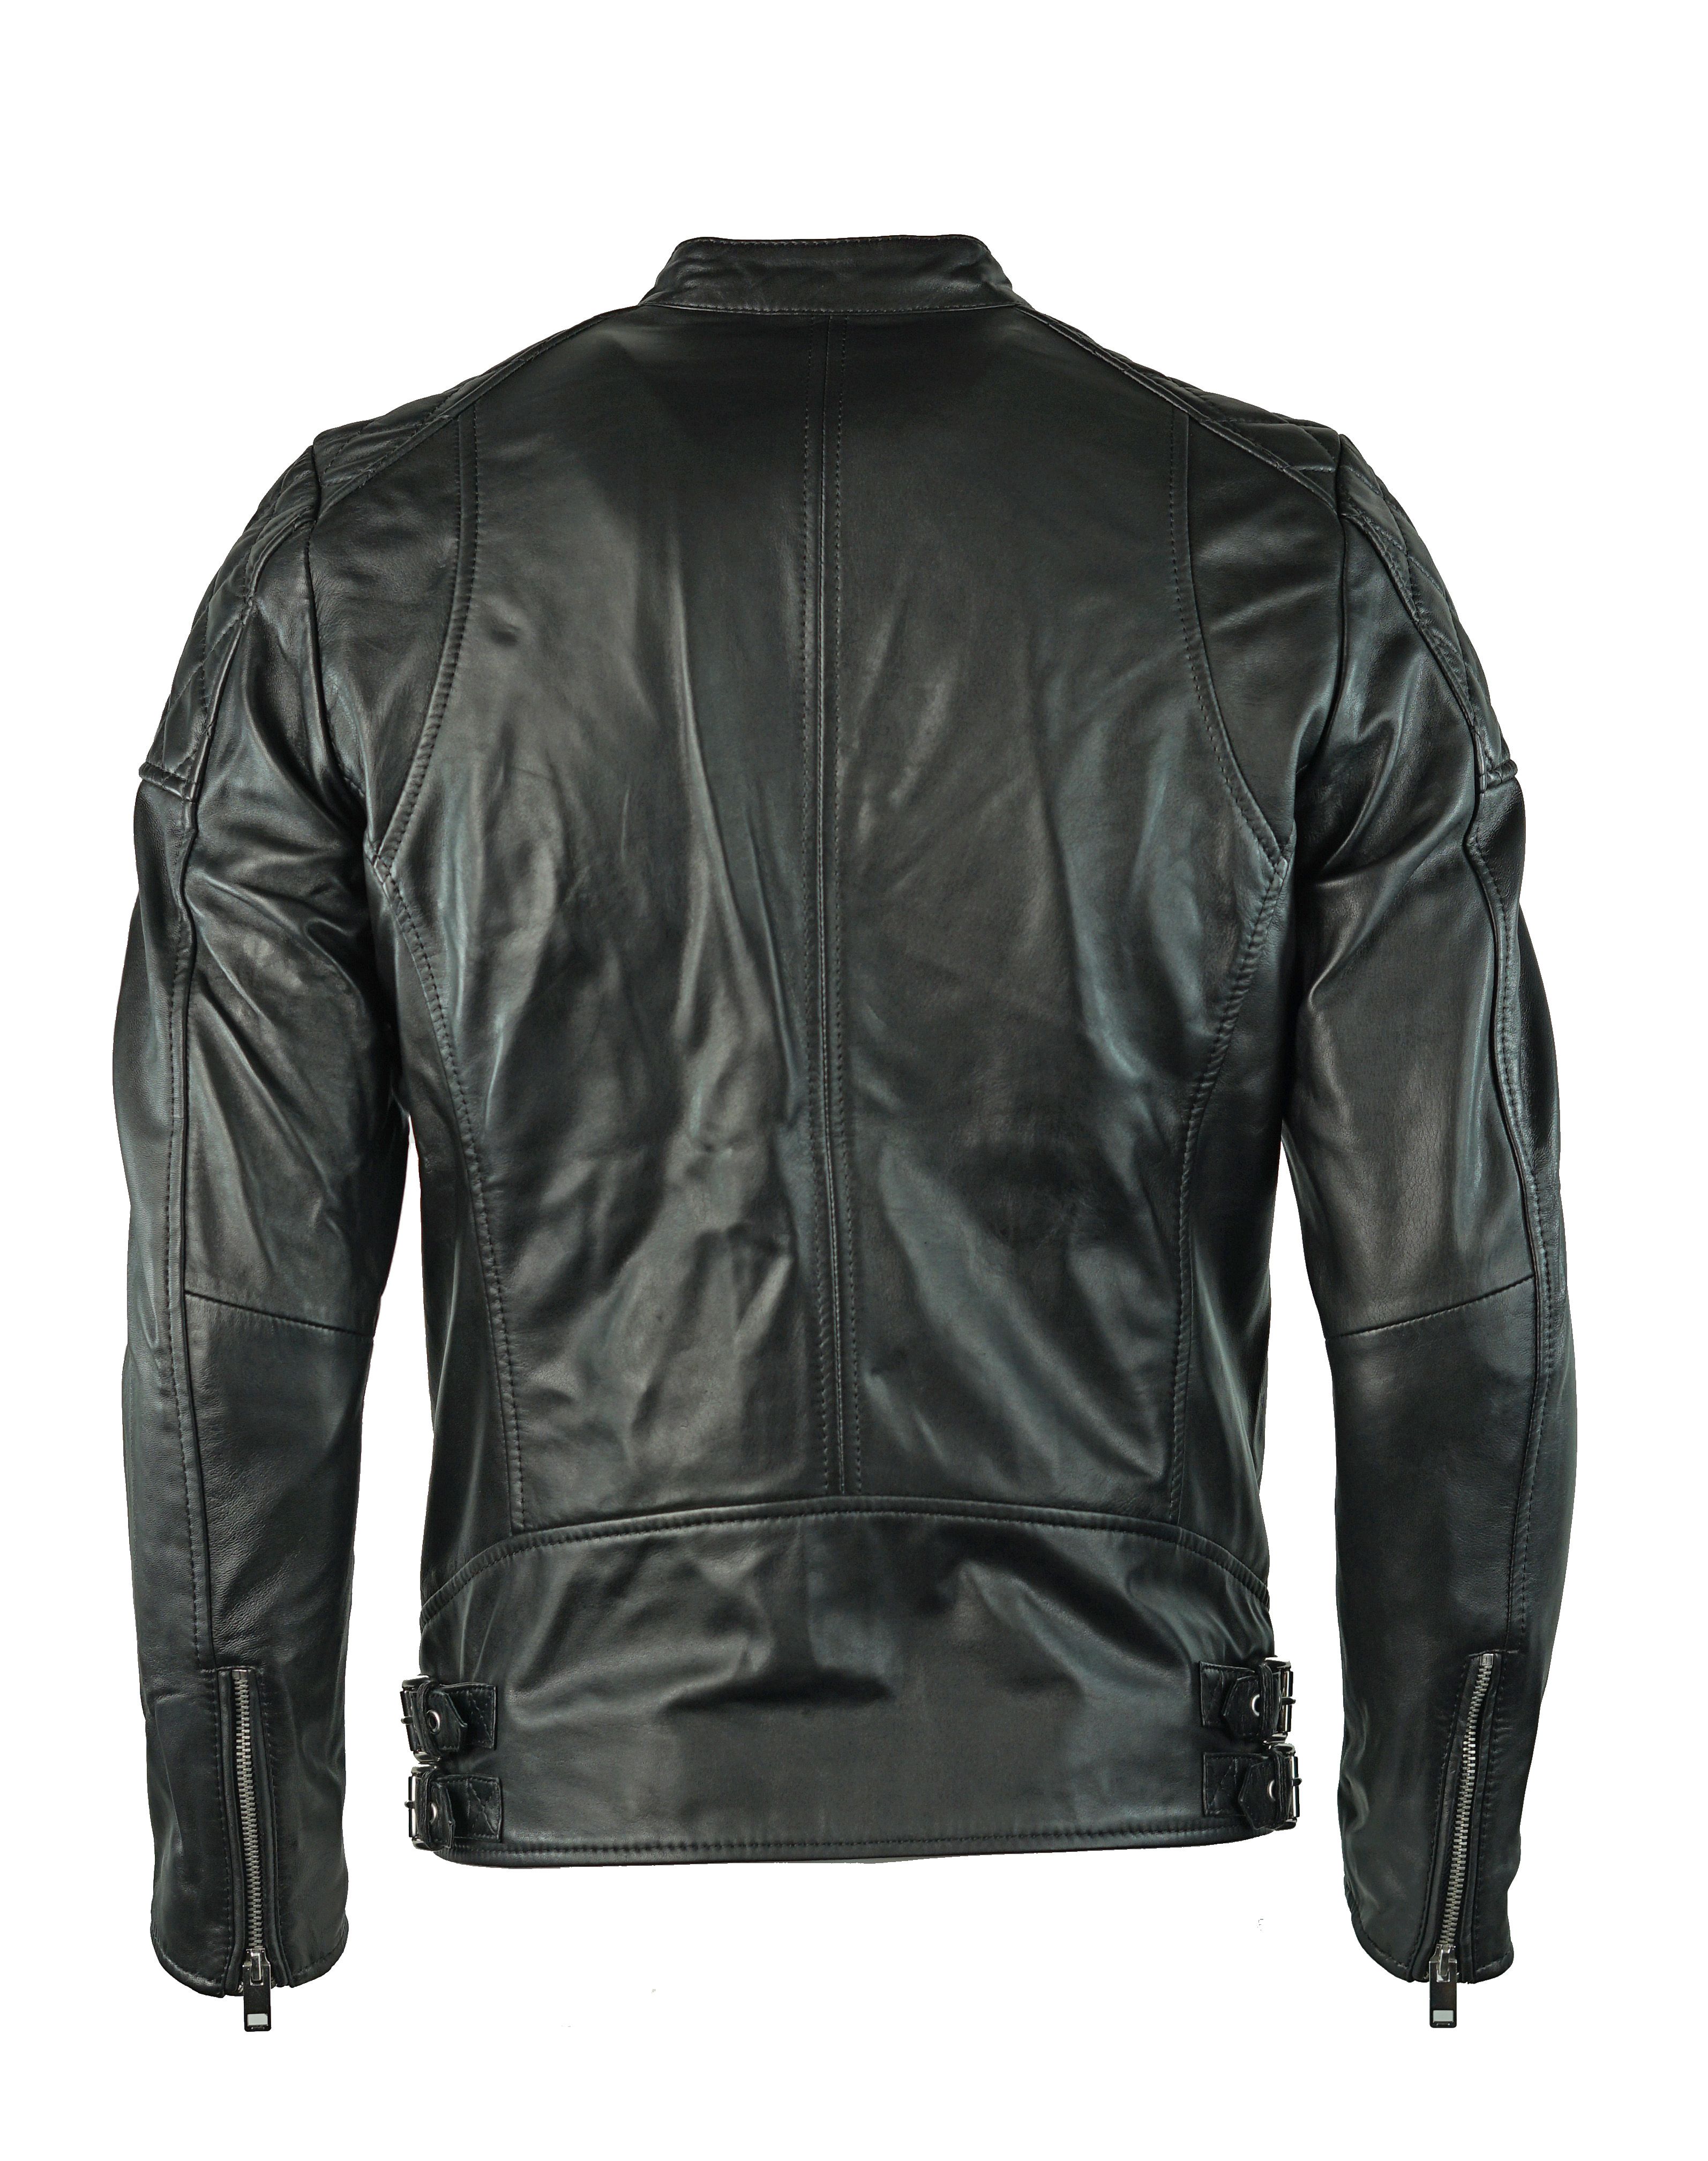 Diesel L-Marton 900 Leather Jacket. 100% Sheep Skin Leather. Branded Diesel Badge on Left Shoulder. Chinese Collar. 2 Zipped Front Pockets. Diesel Spring/Summer 2017 Collection